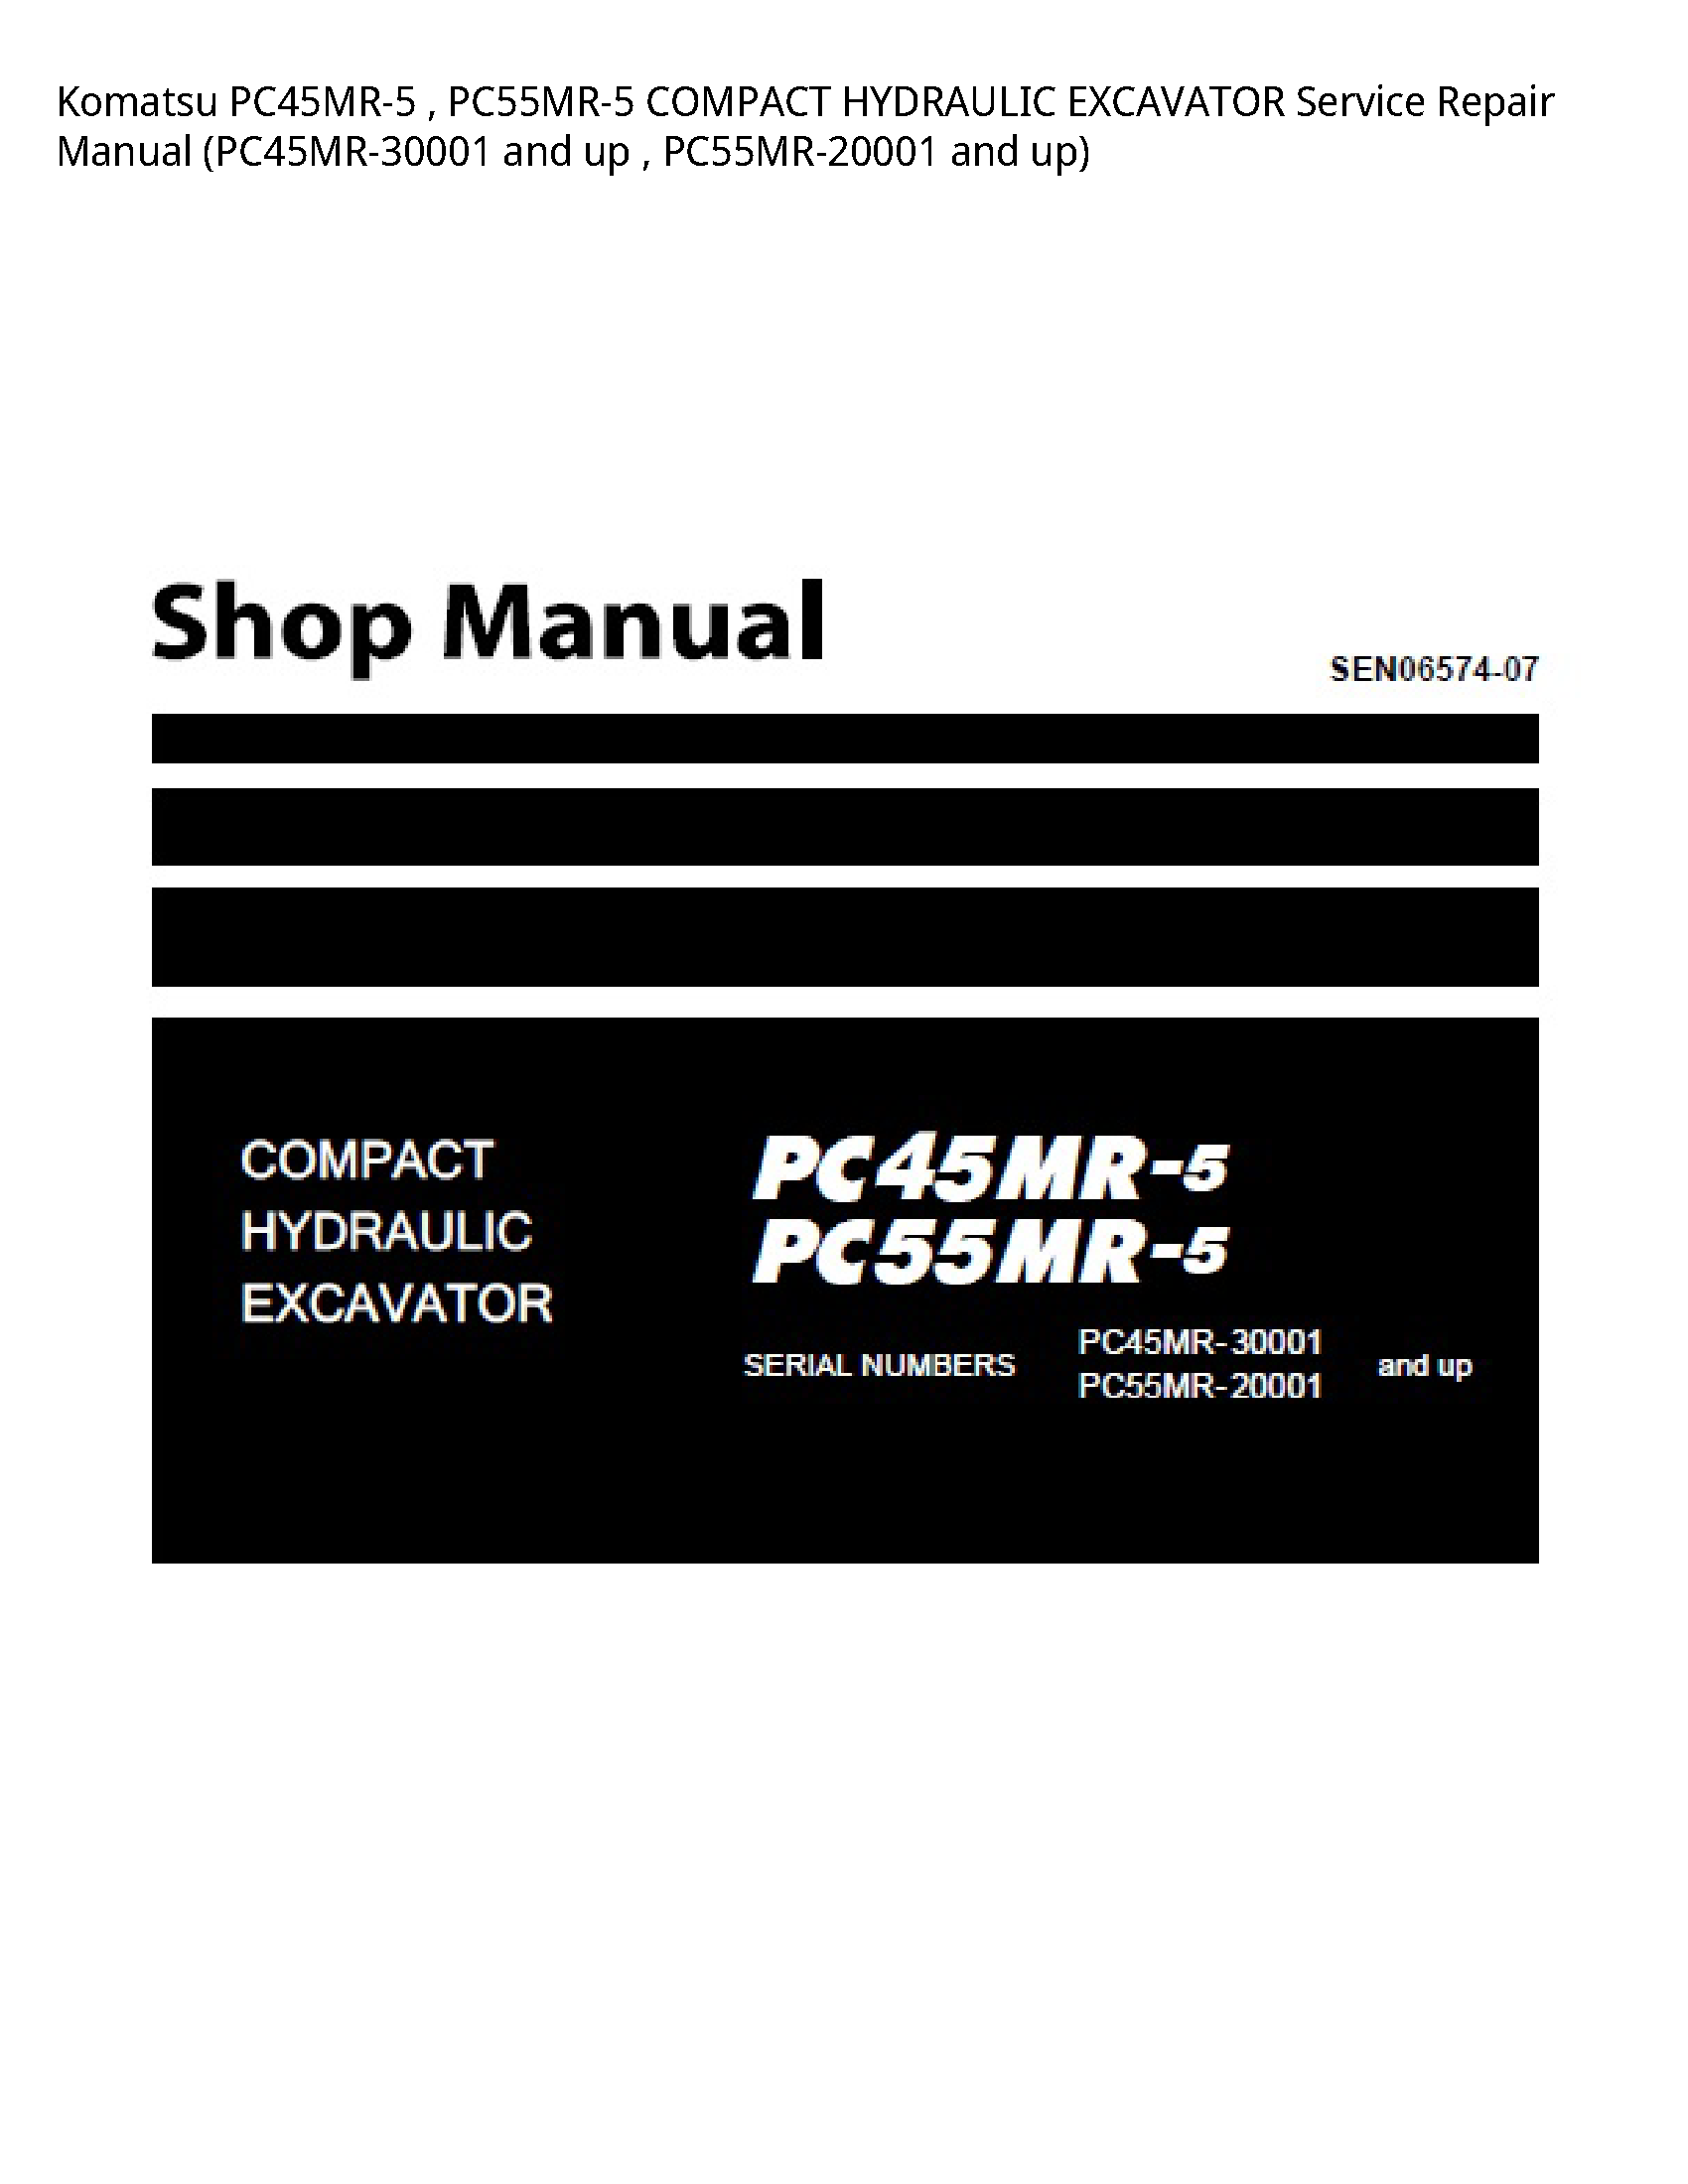 KOMATSU PC45MR-5 COMPACT HYDRAULIC EXCAVATOR manual